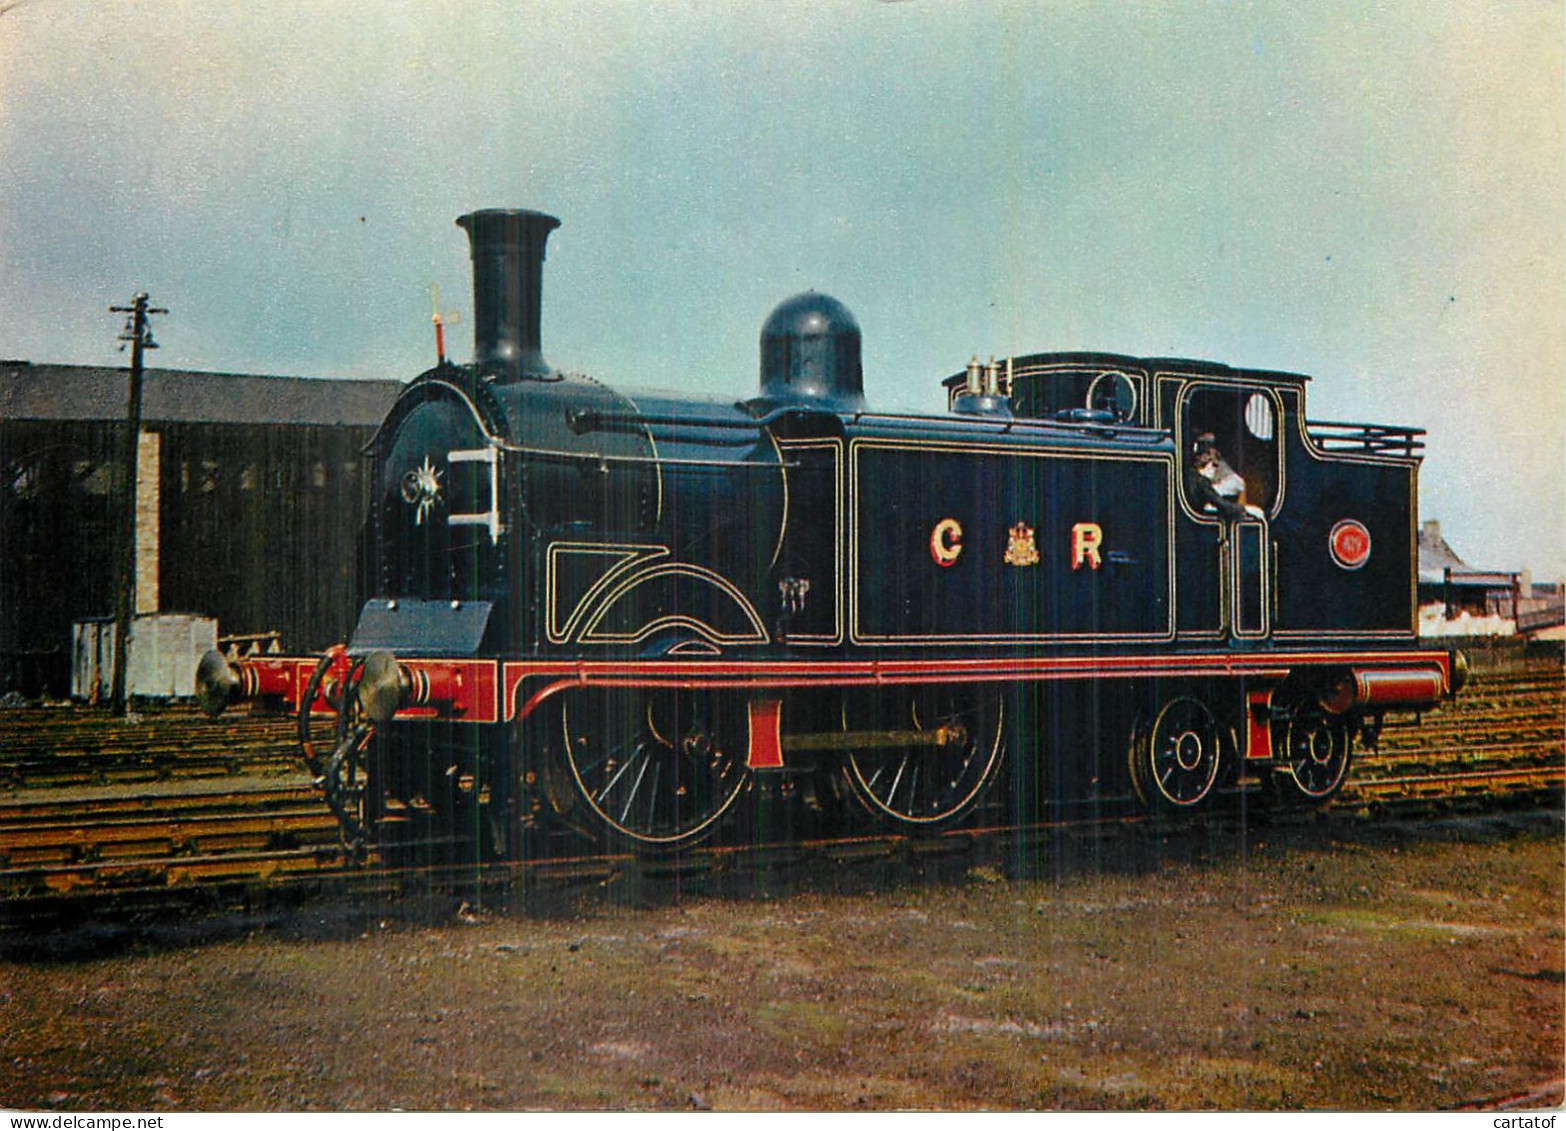 Caledonian Railway Locomotive N° 419 - Equipment